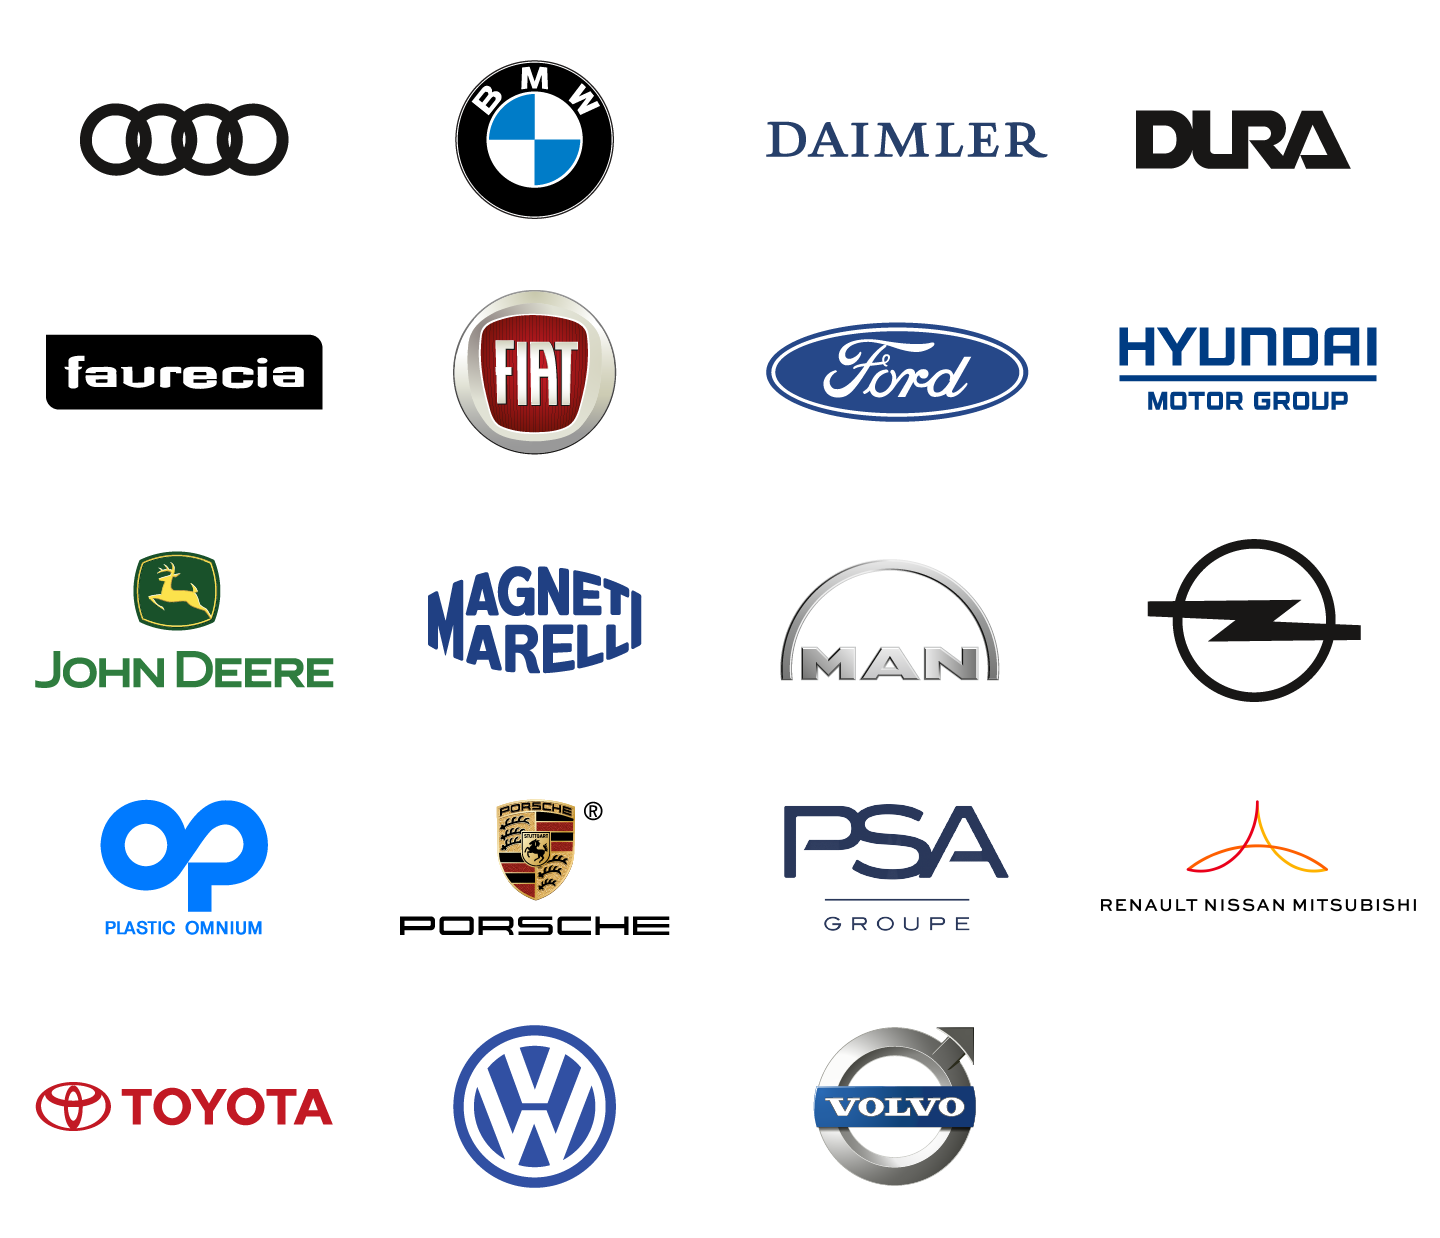 Logos des entreprises : Audi, BMW, Daimler, DURA, Faurecia, Fiat, Ford, Hyundai, John deere, Magneti marelli, MAN, opel, Plastic omnium, Porsche, PSA, Renault Nissan Mitsubishi, Toyota, Volkswagen, Volvo